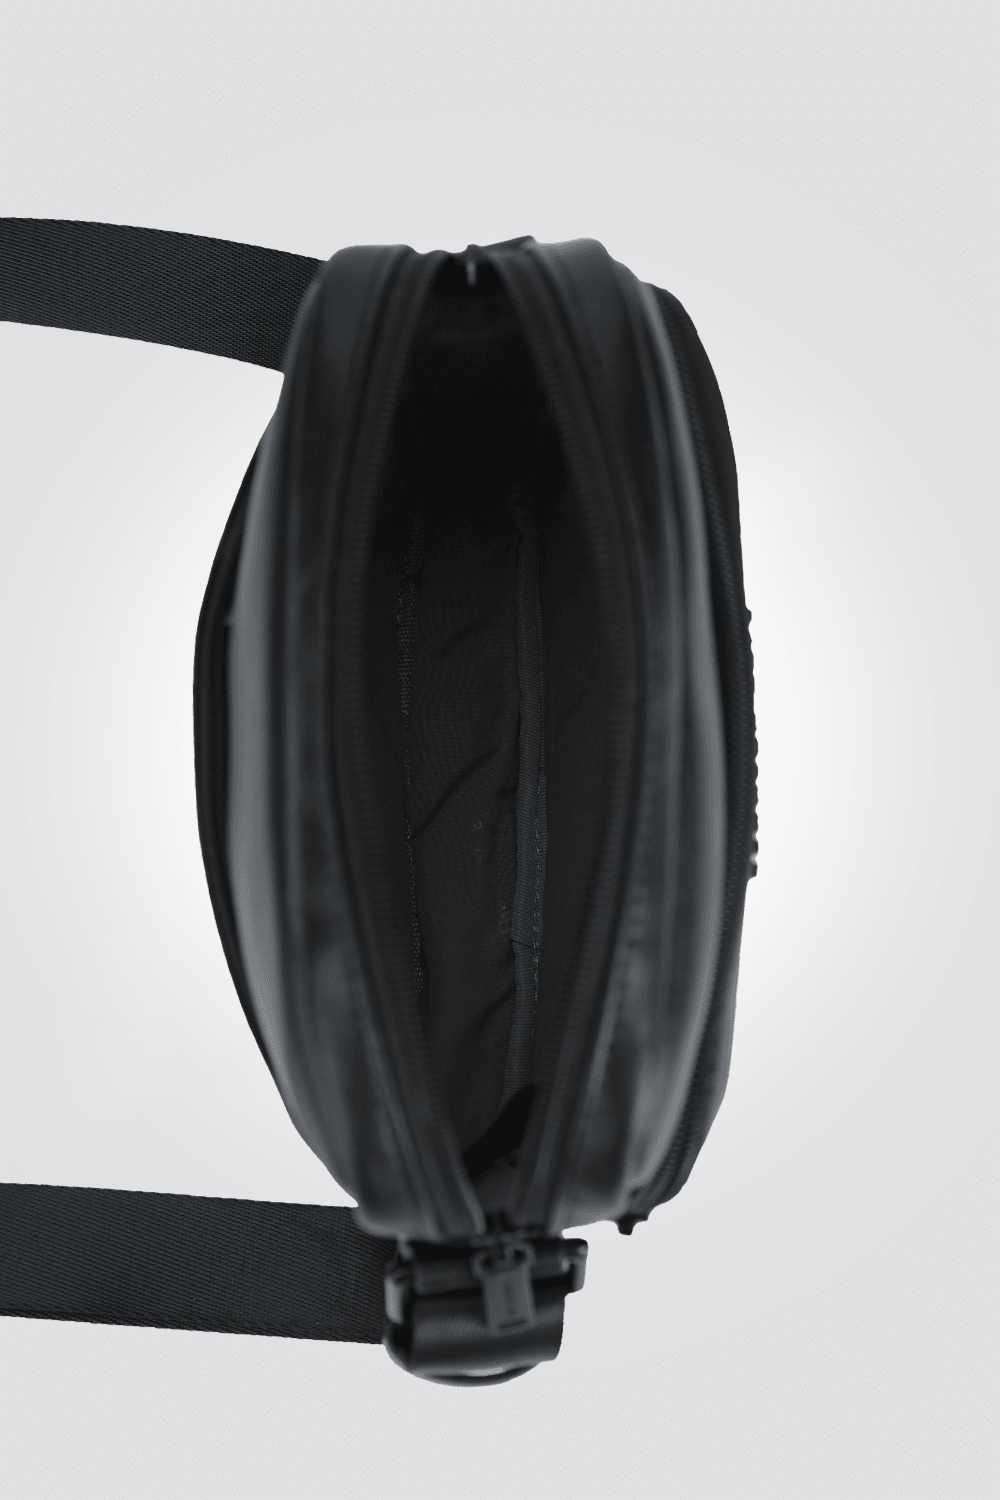 KENNETH COLE - תיק צד עור לגבר בצבע שחור - MASHBIR//365